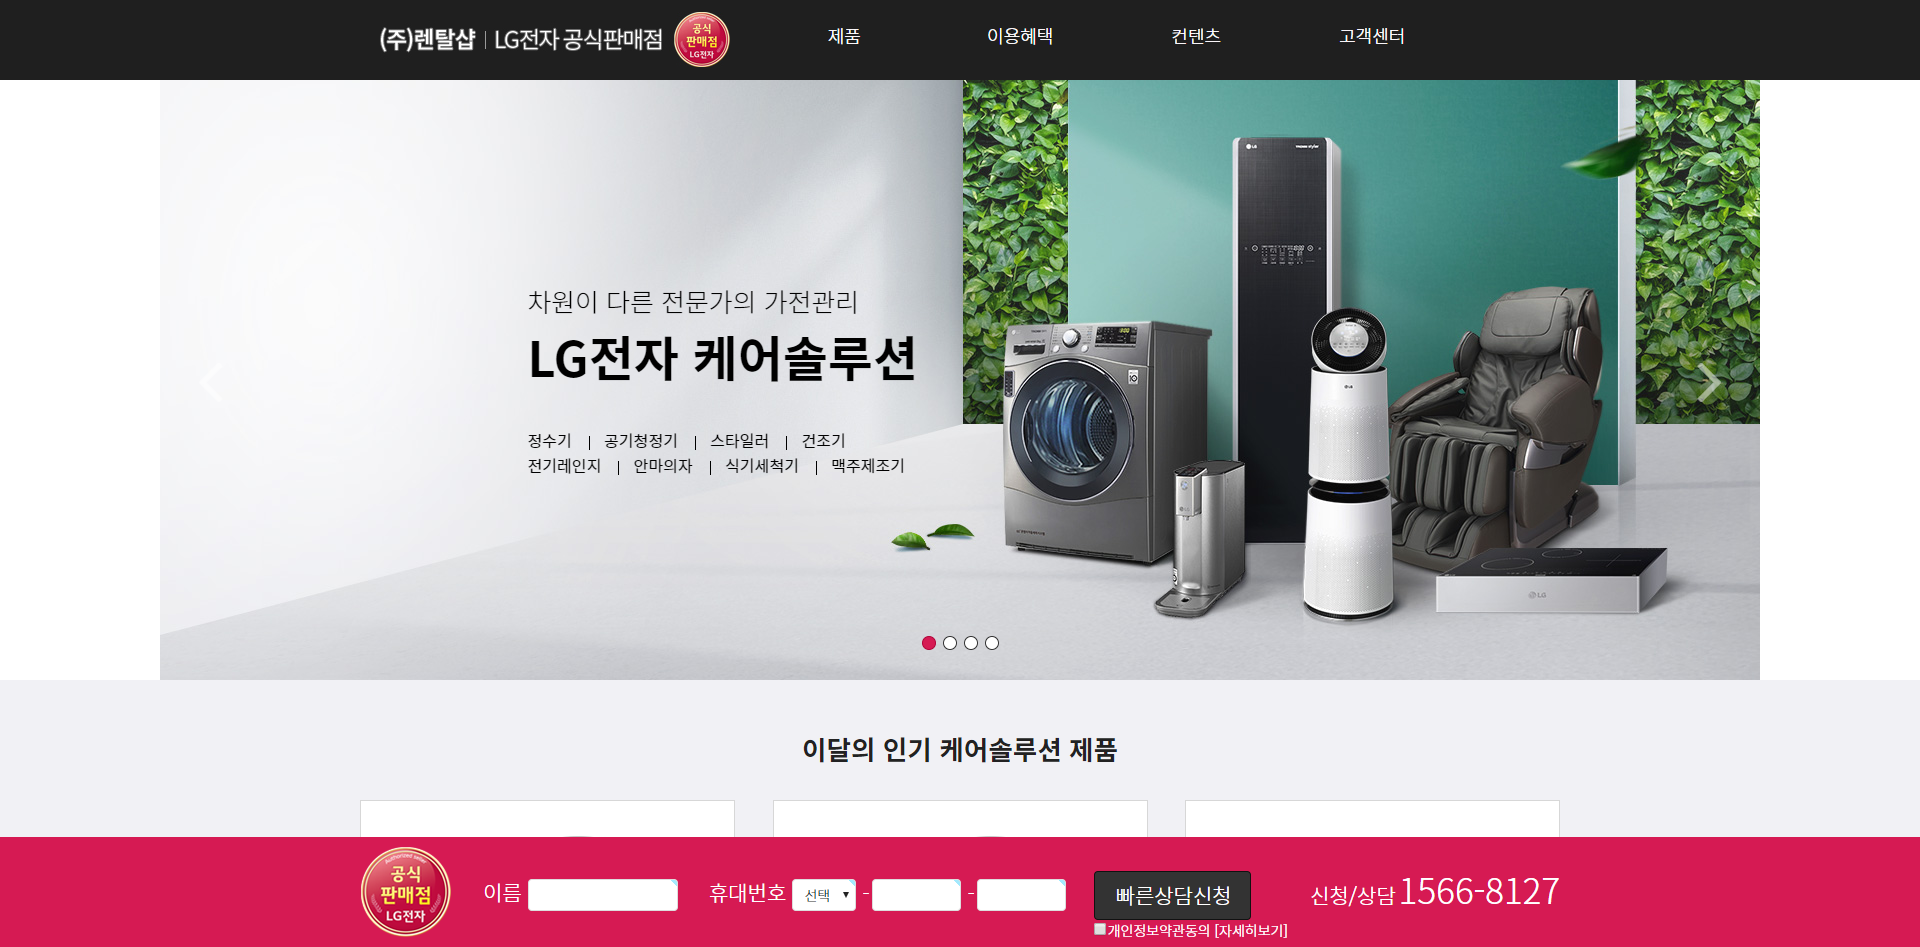 FireShot Capture 002 - LG 퓨리케어정수기 렌탈 - LG 공기청정기 - LG 전자 공식 판매점 - lgrentalshop.co.kr.png